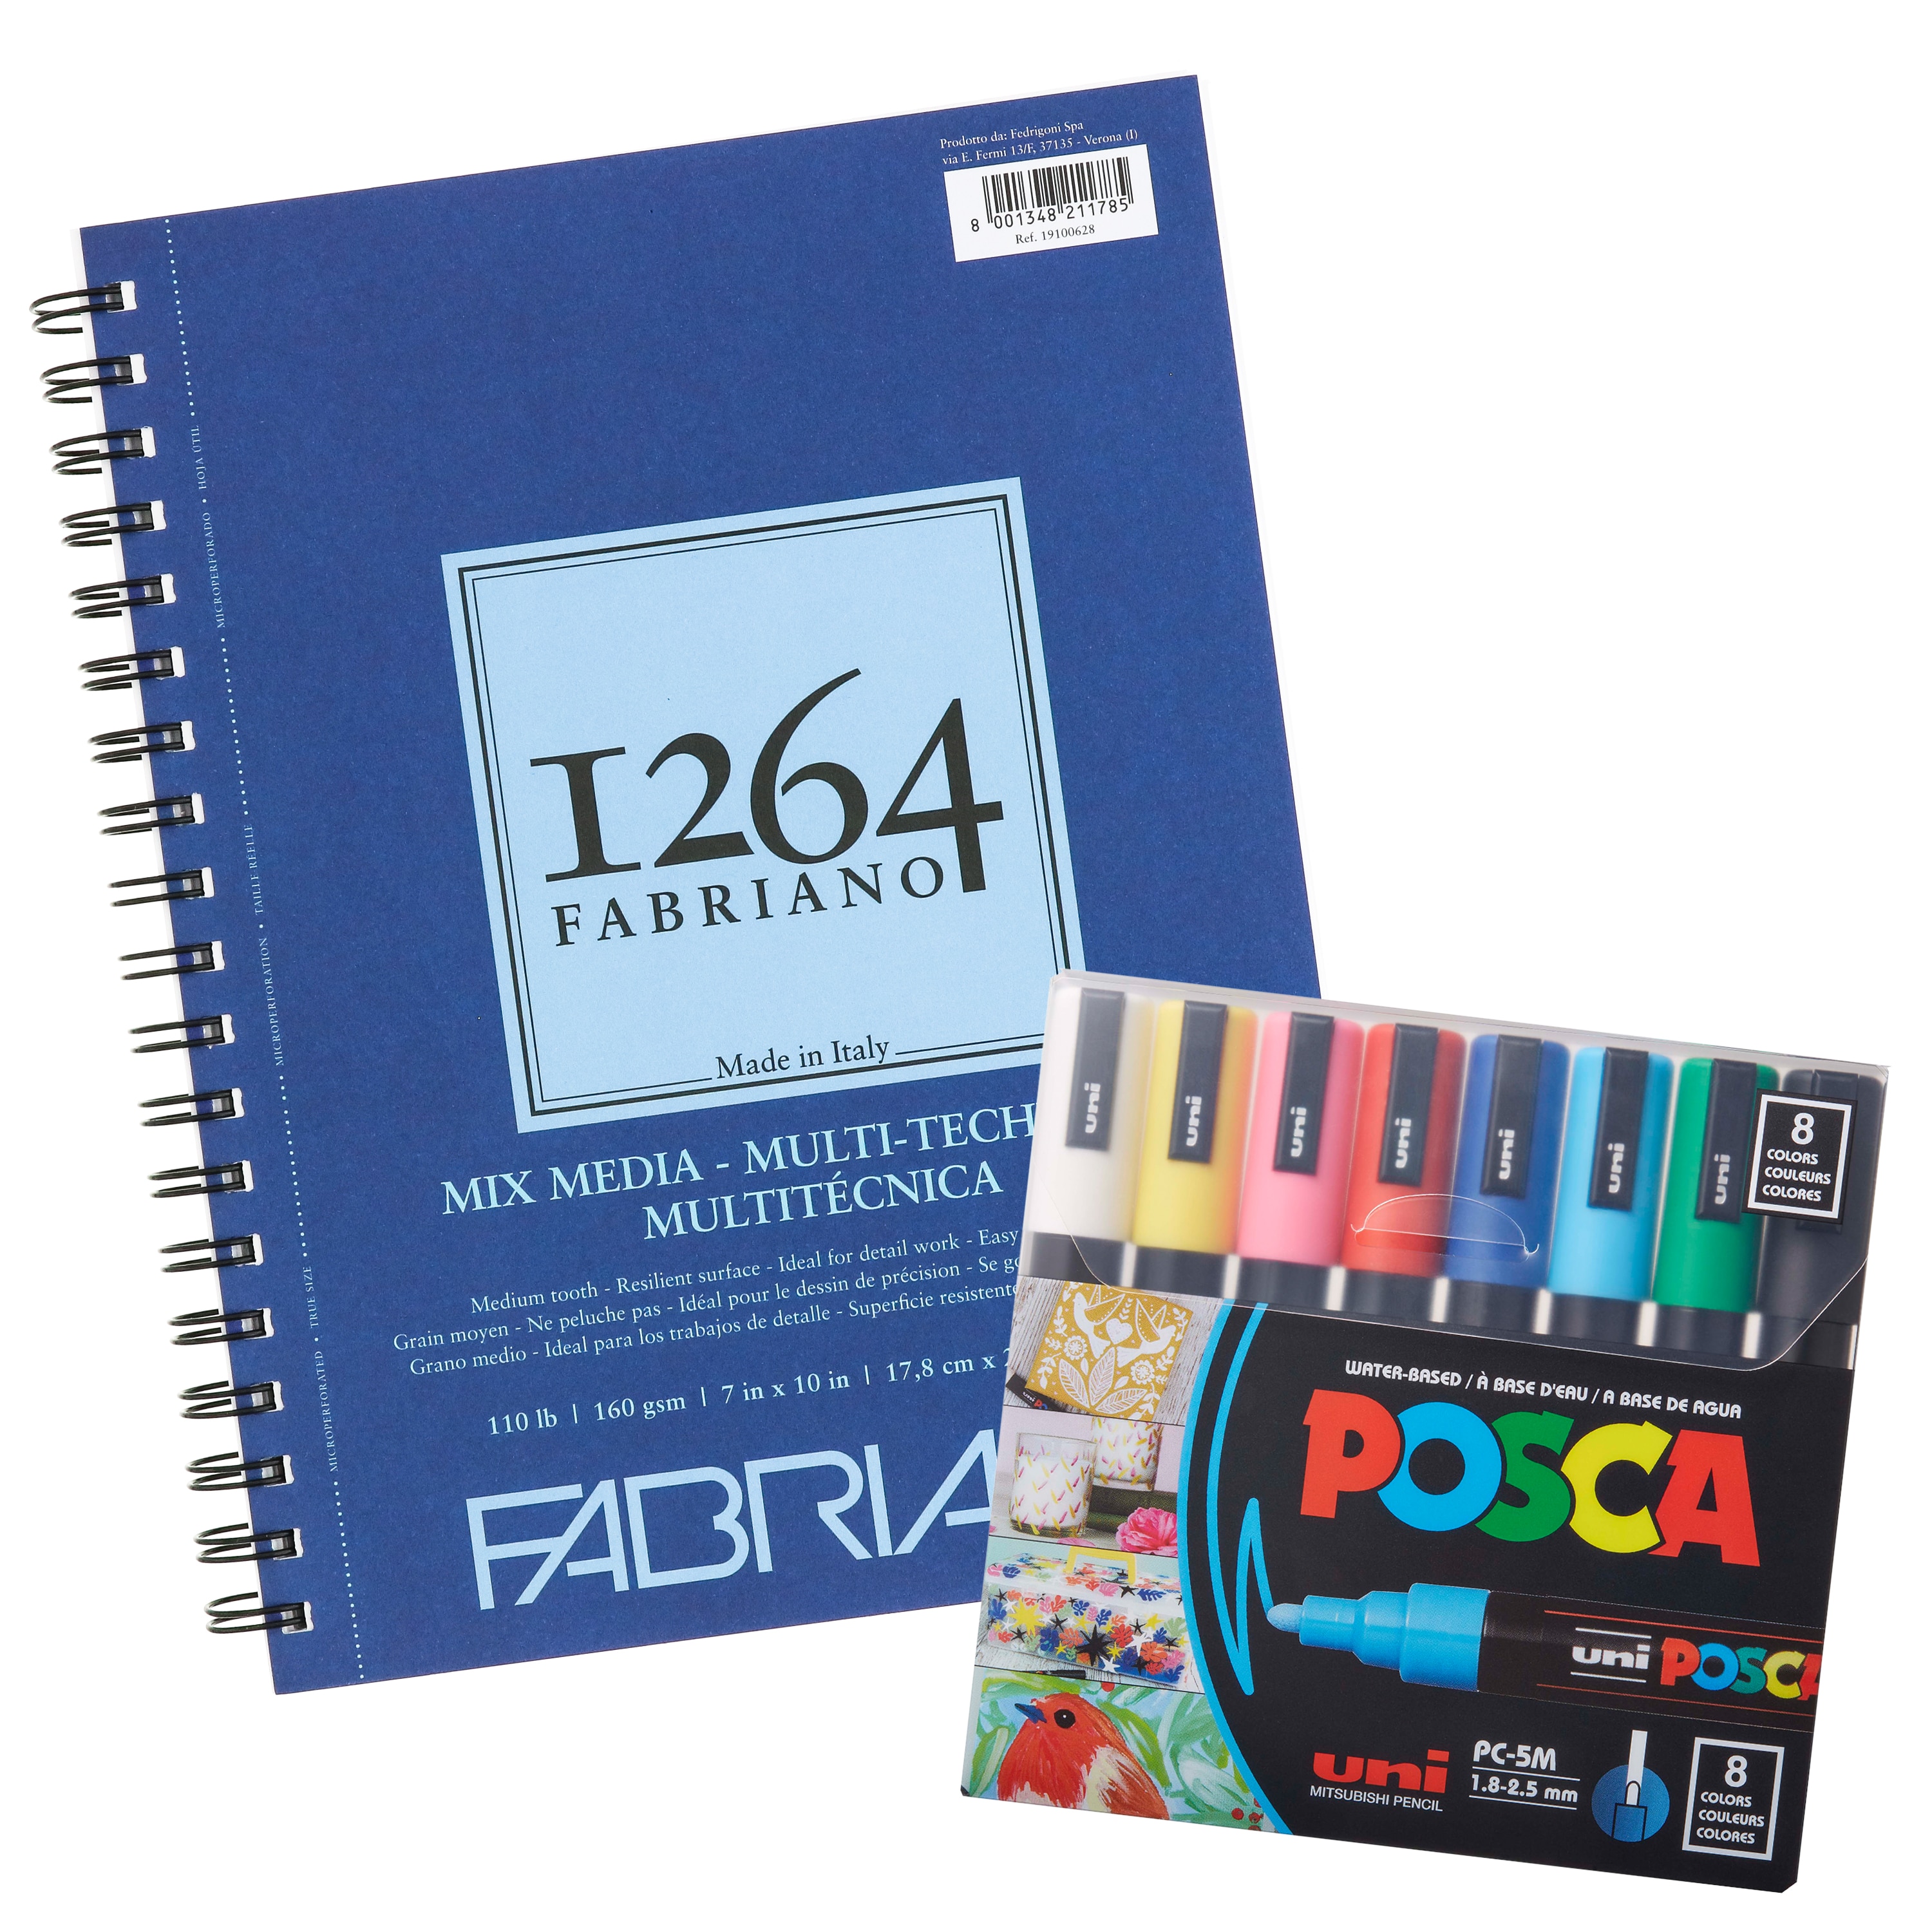 Fabriano 1264 Mixed Media Pad, and POSCA Marker 8-Color PC-5M Medium Pt Bundle